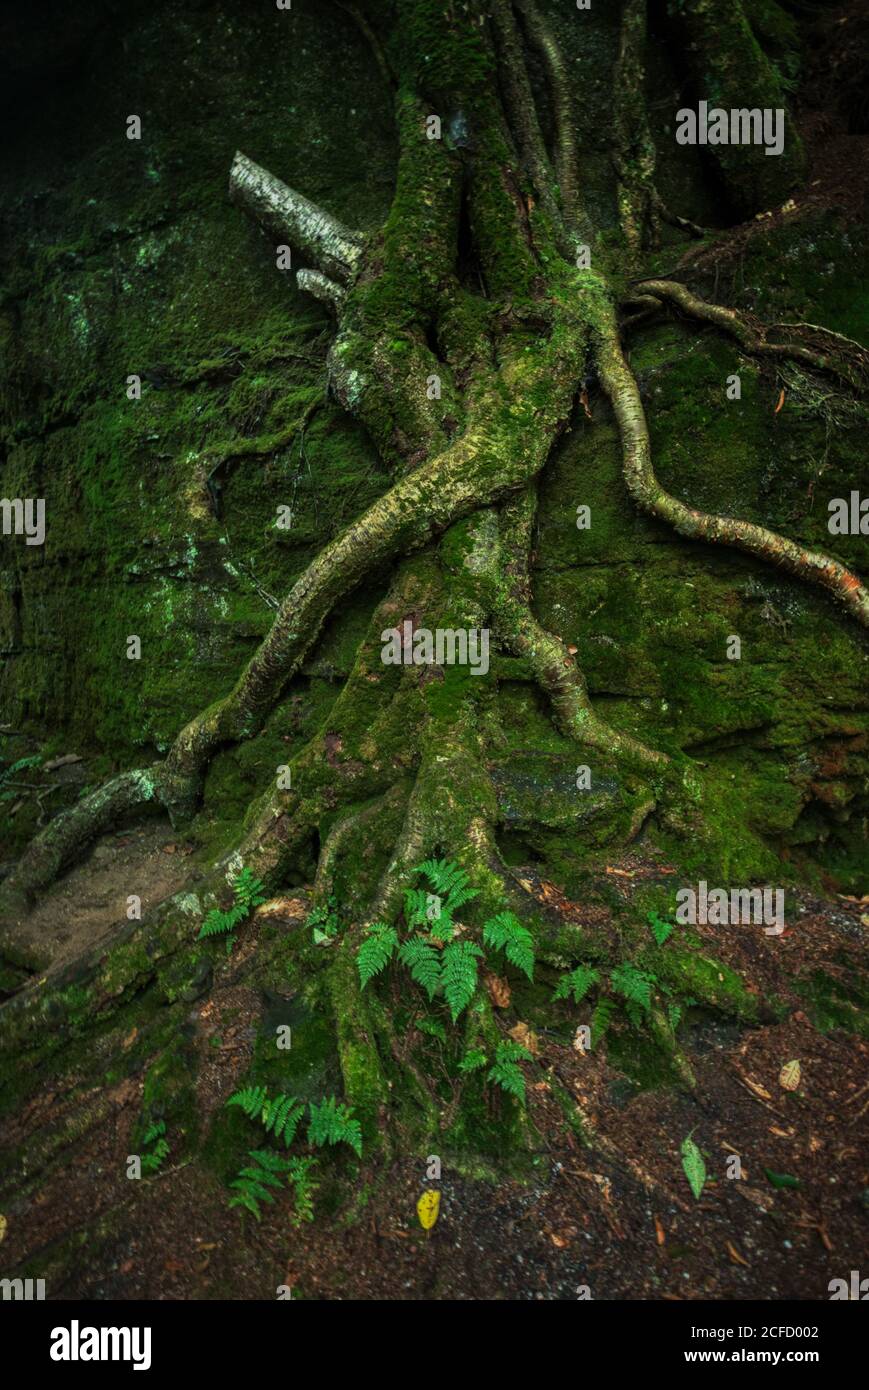 Panama Rocks Scenic Park, Chautauqua County, New York, USA - ein alter versteinerter Wald aus Quarzkonglomerat Stockfoto